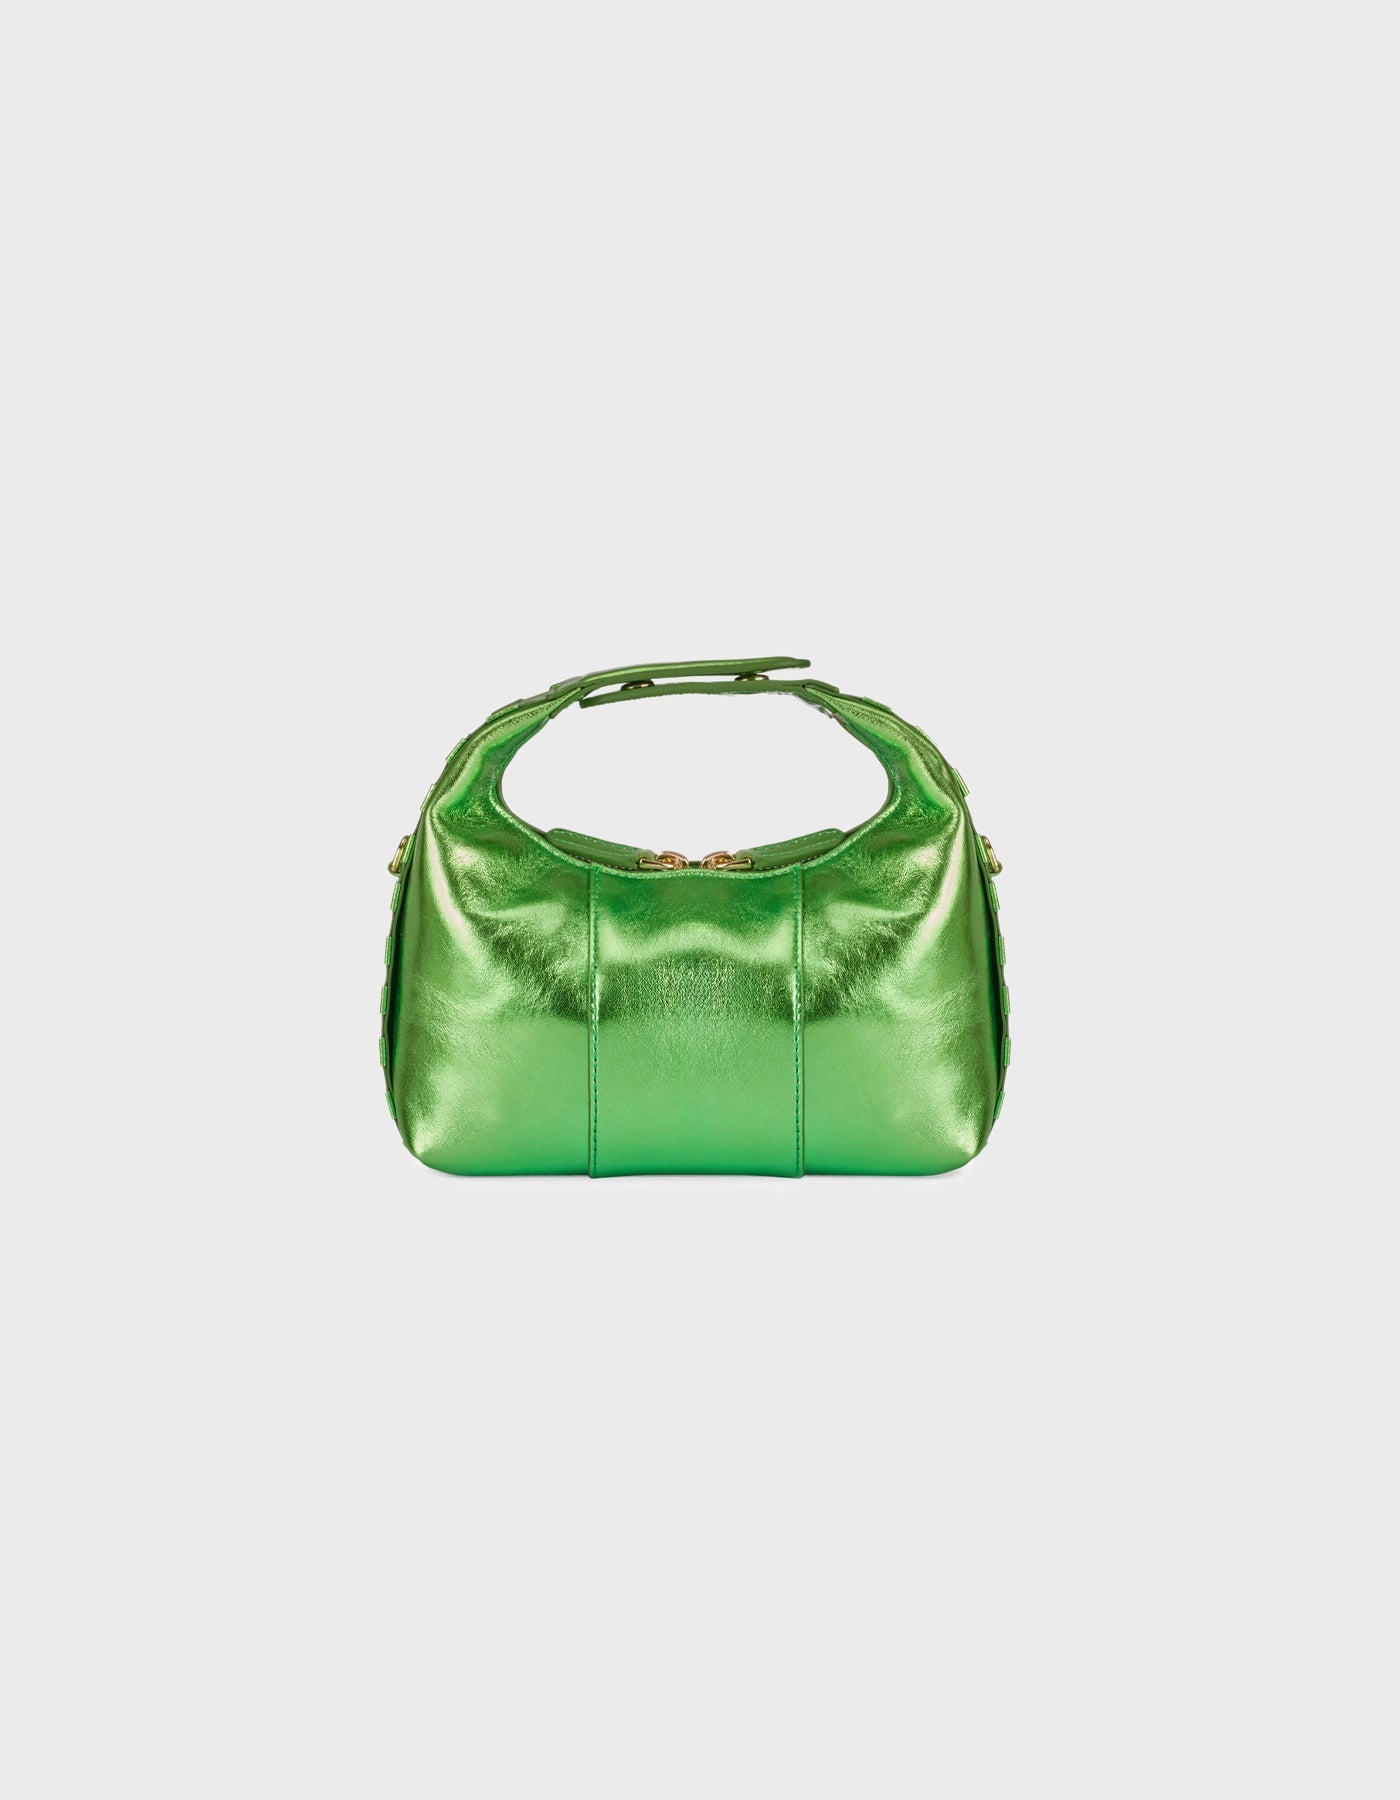 Hiva Atelier | Mini Croissant Metallic Crinkled Green | Beautiful and Versatile